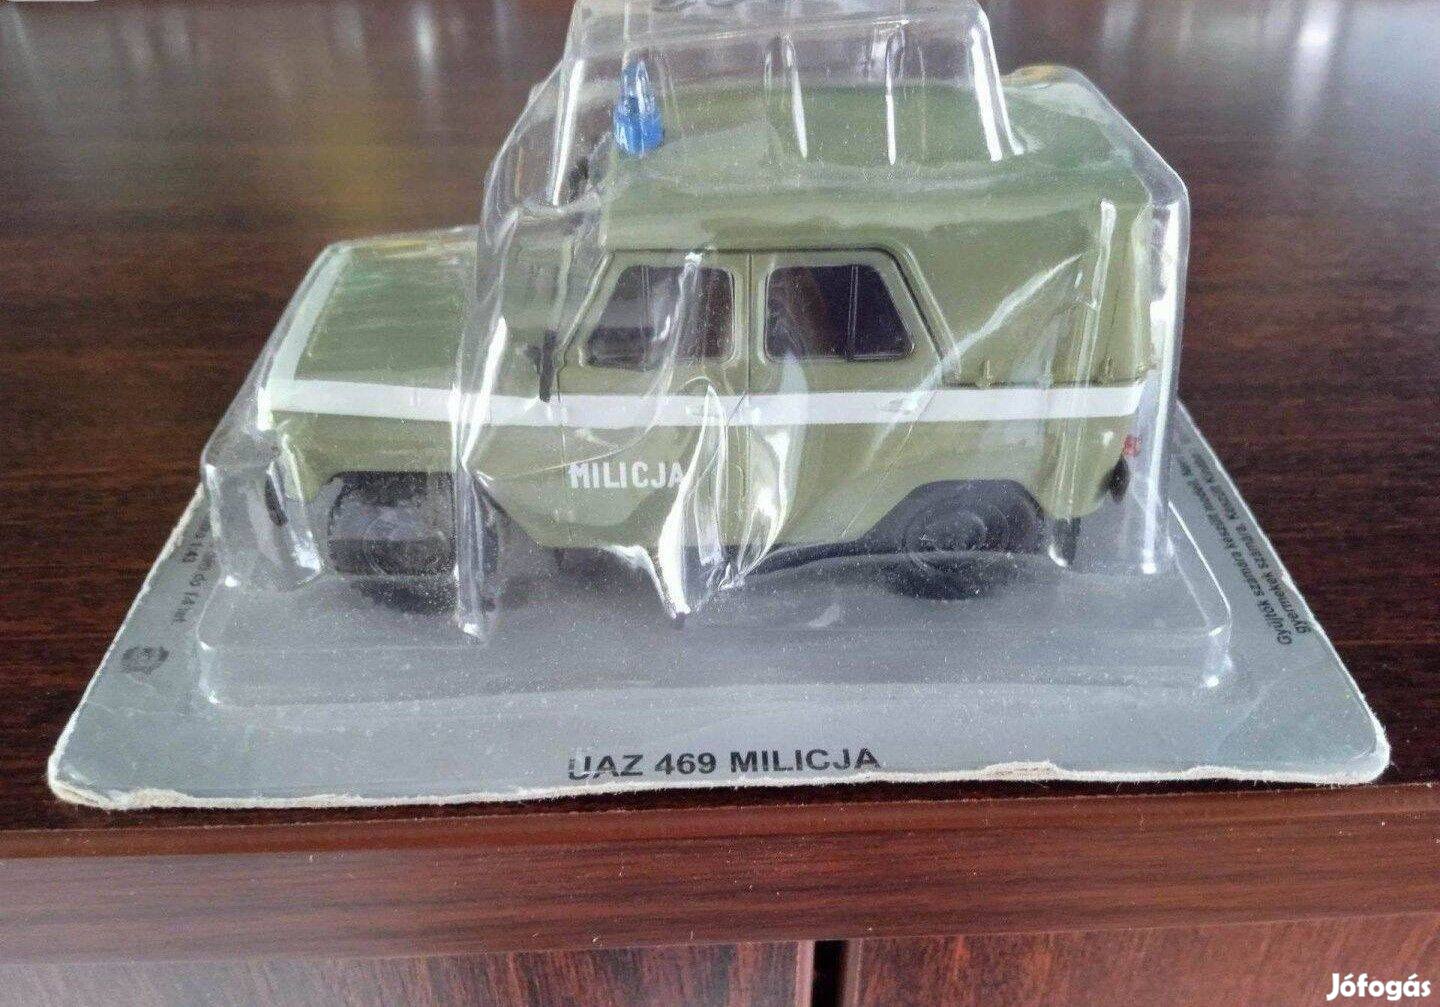 Uaz 469 milicia "kultowe" DEA kisauto modell 1/43 Eladó